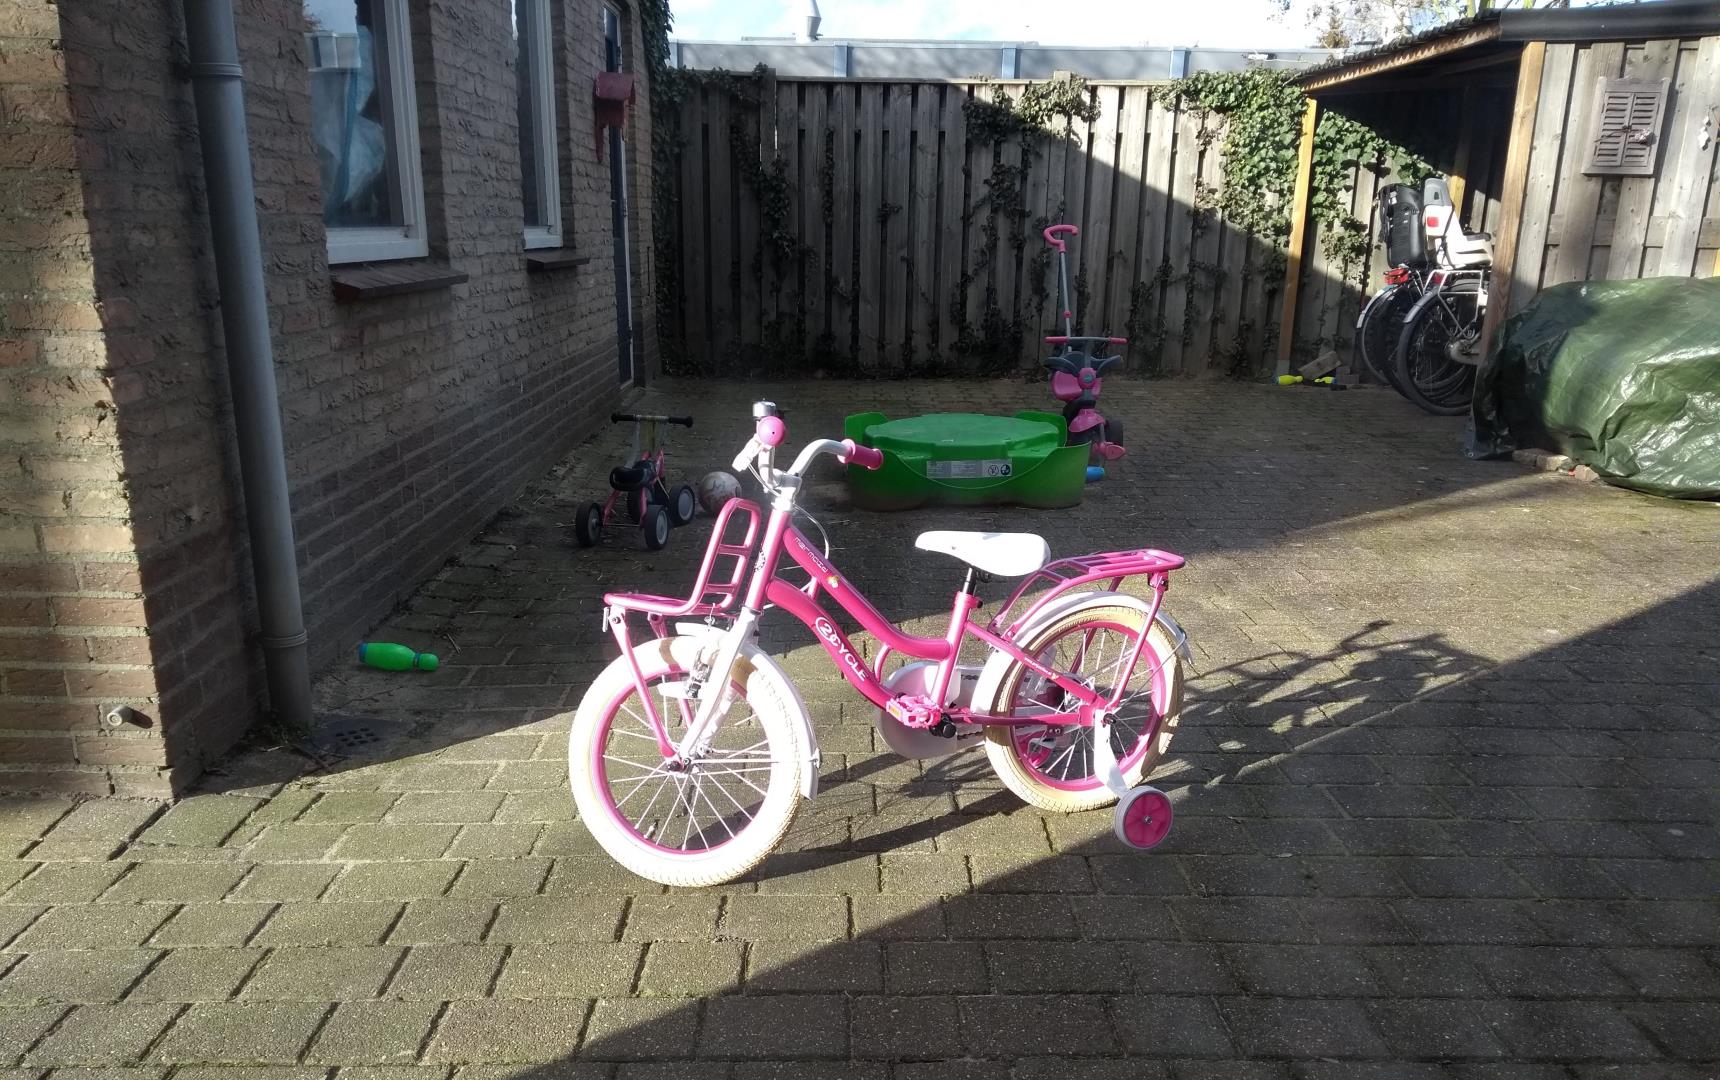 fiets, meisjesfiets, kinderfiets, kleuter, leren fietsen, zijwieltjes, kinderen, mamablog, mamalifestyleblog, gezin, roze fiets, lalogblog, lalog.nl, lalog